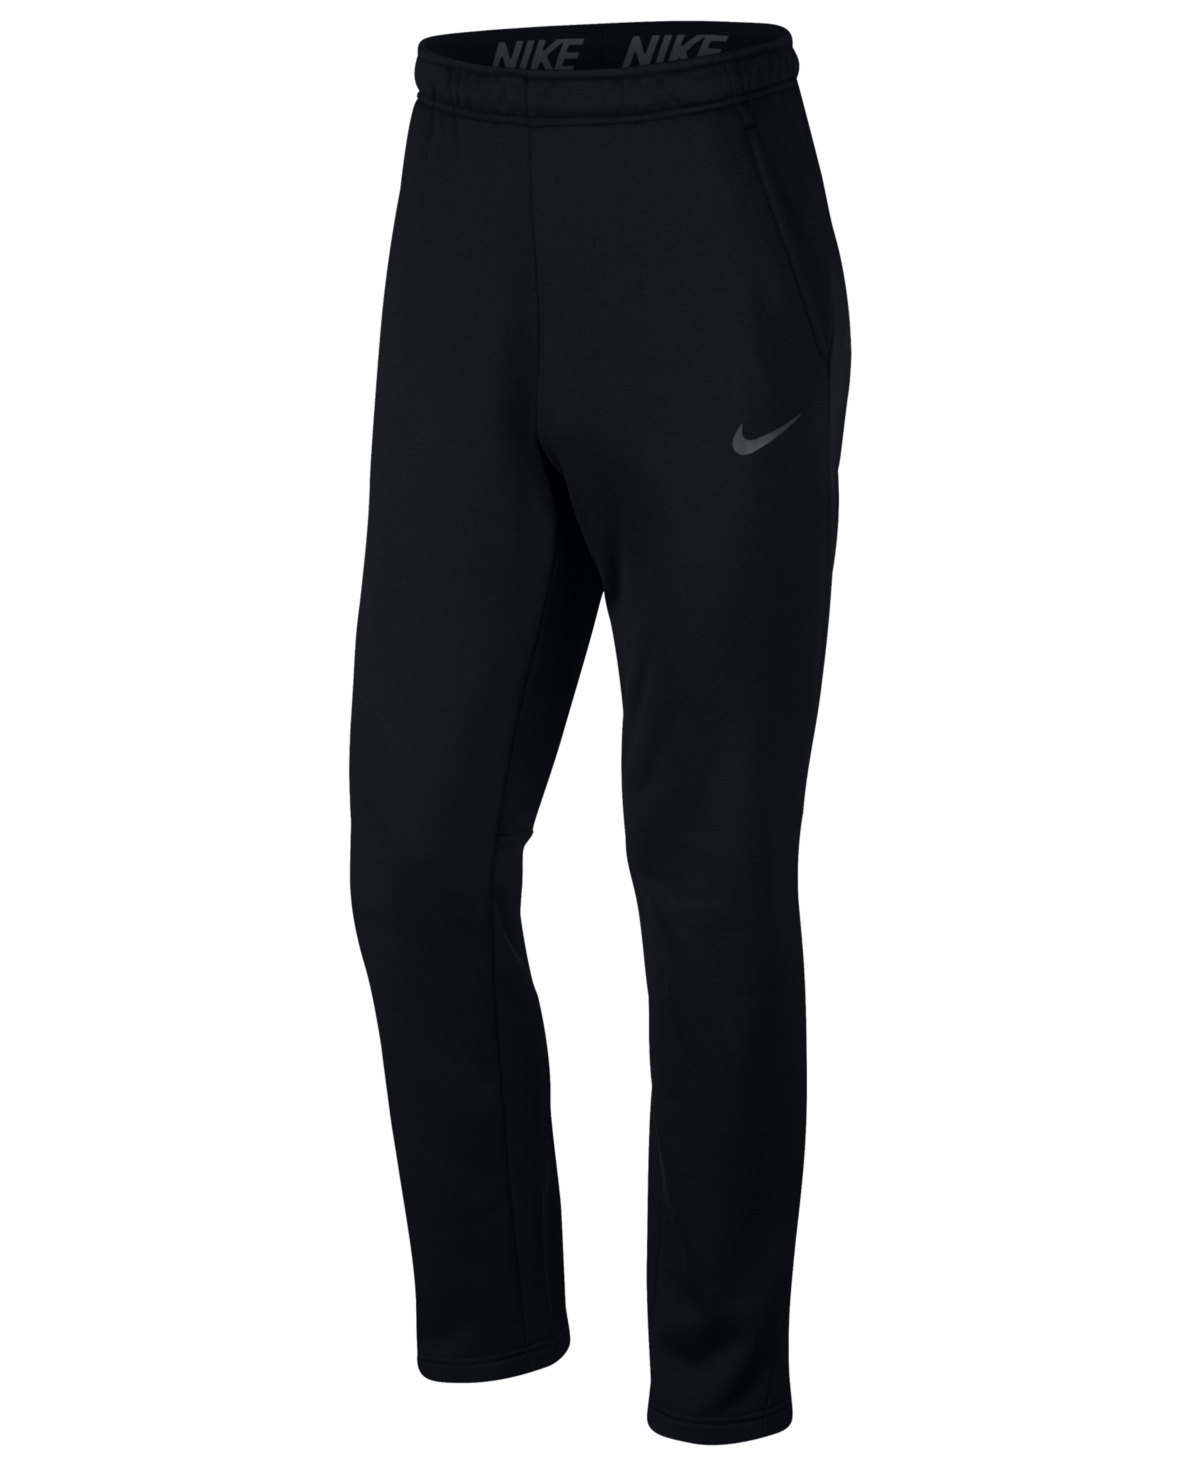 UPC 886668211596 product image for Nike Men's Therma Open Bottom Training Pants | upcitemdb.com